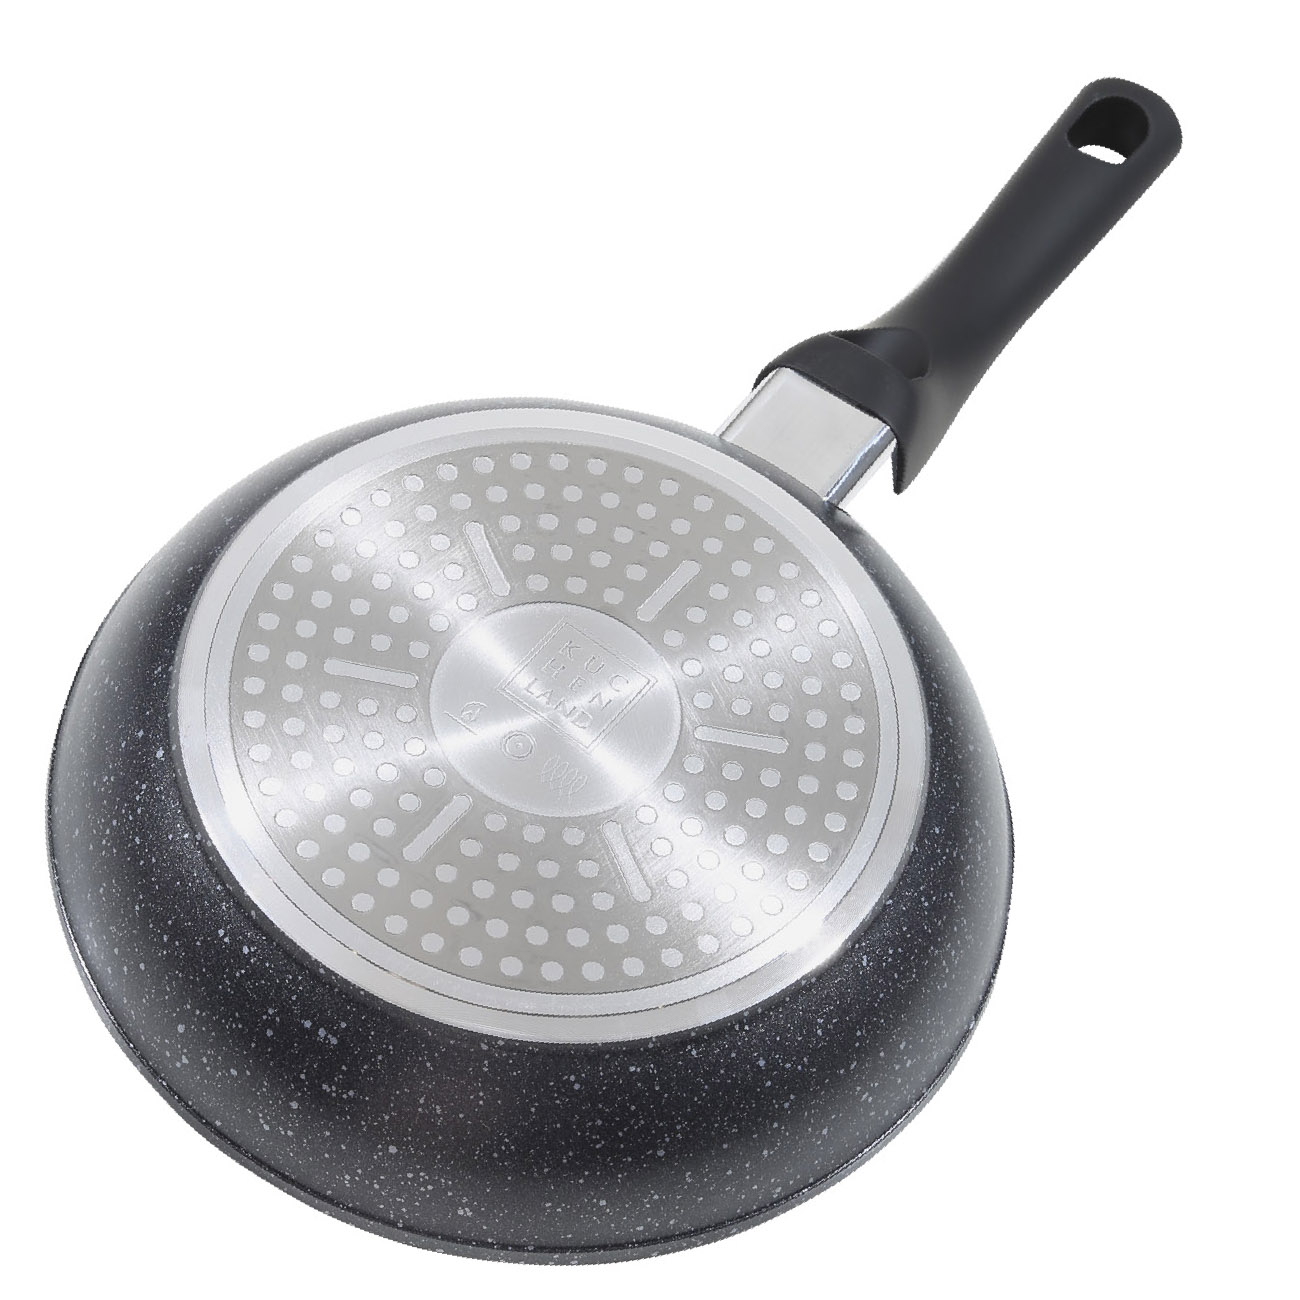 Frying pan, 28 cm, coated, aluminum, Proper изображение № 3